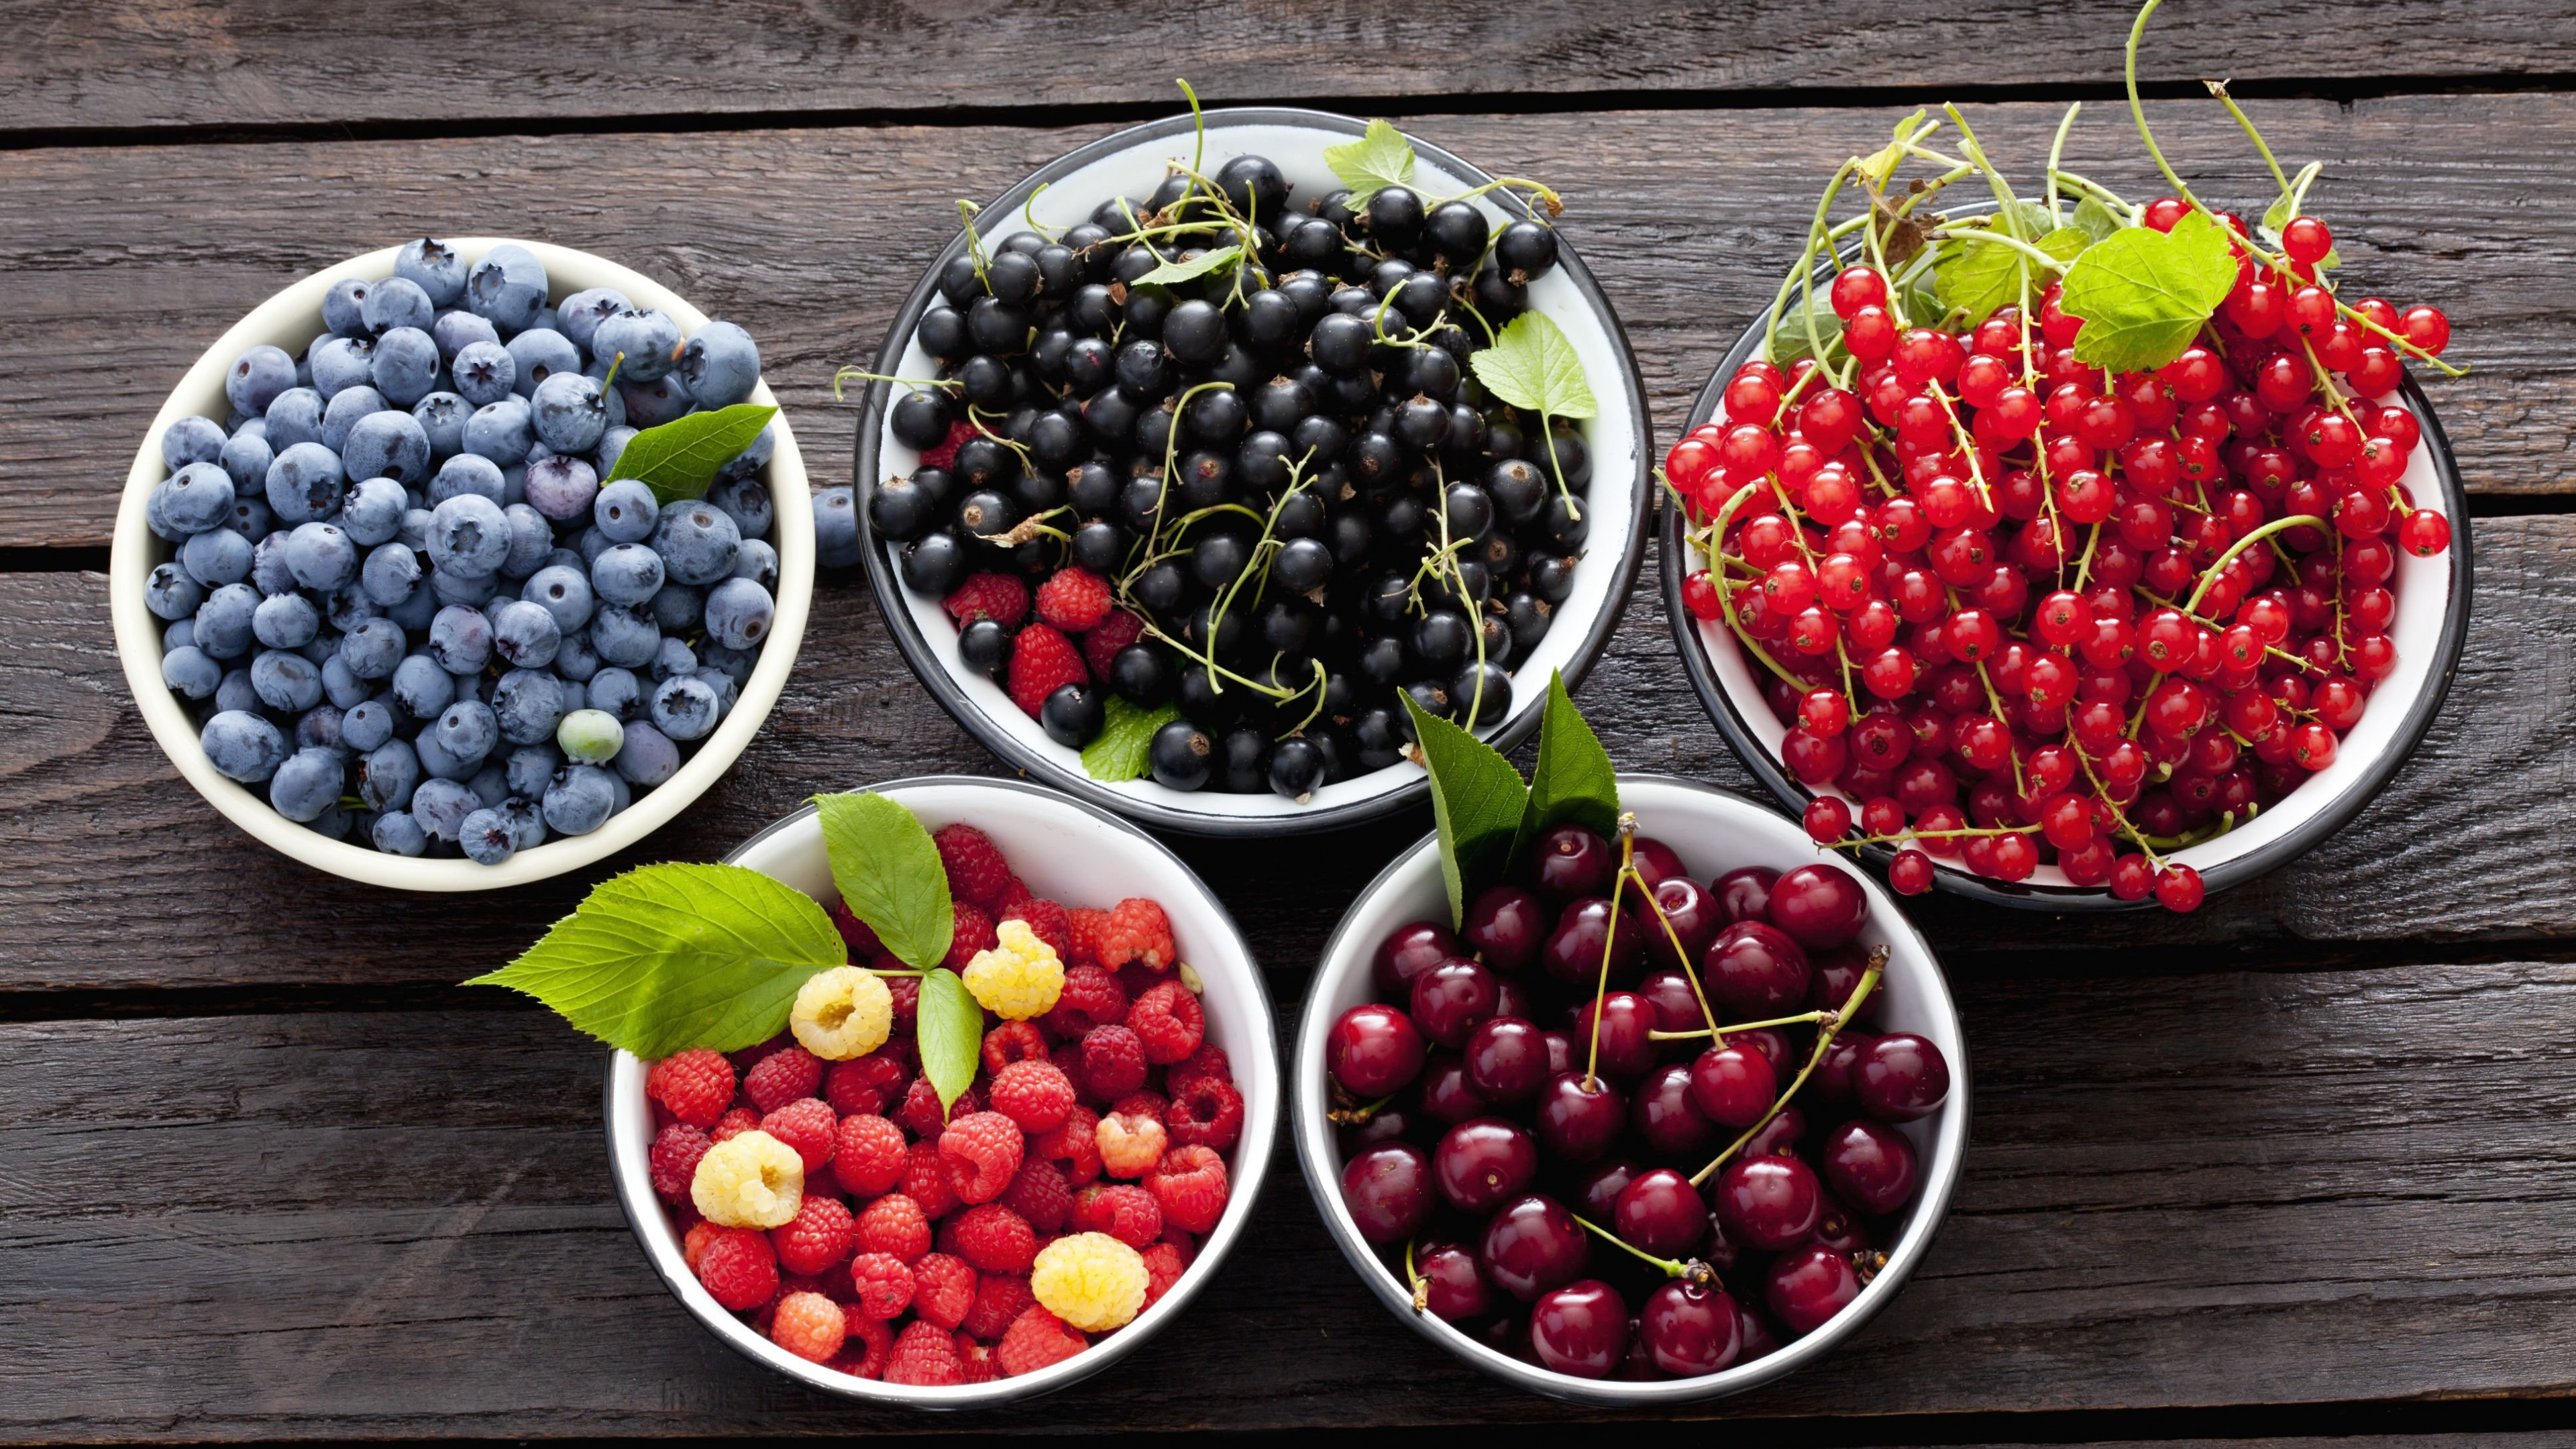 Berries wallpaper, High-resolution image, Colorful fruits, Nature's beauty, 3840x2160 4K Desktop